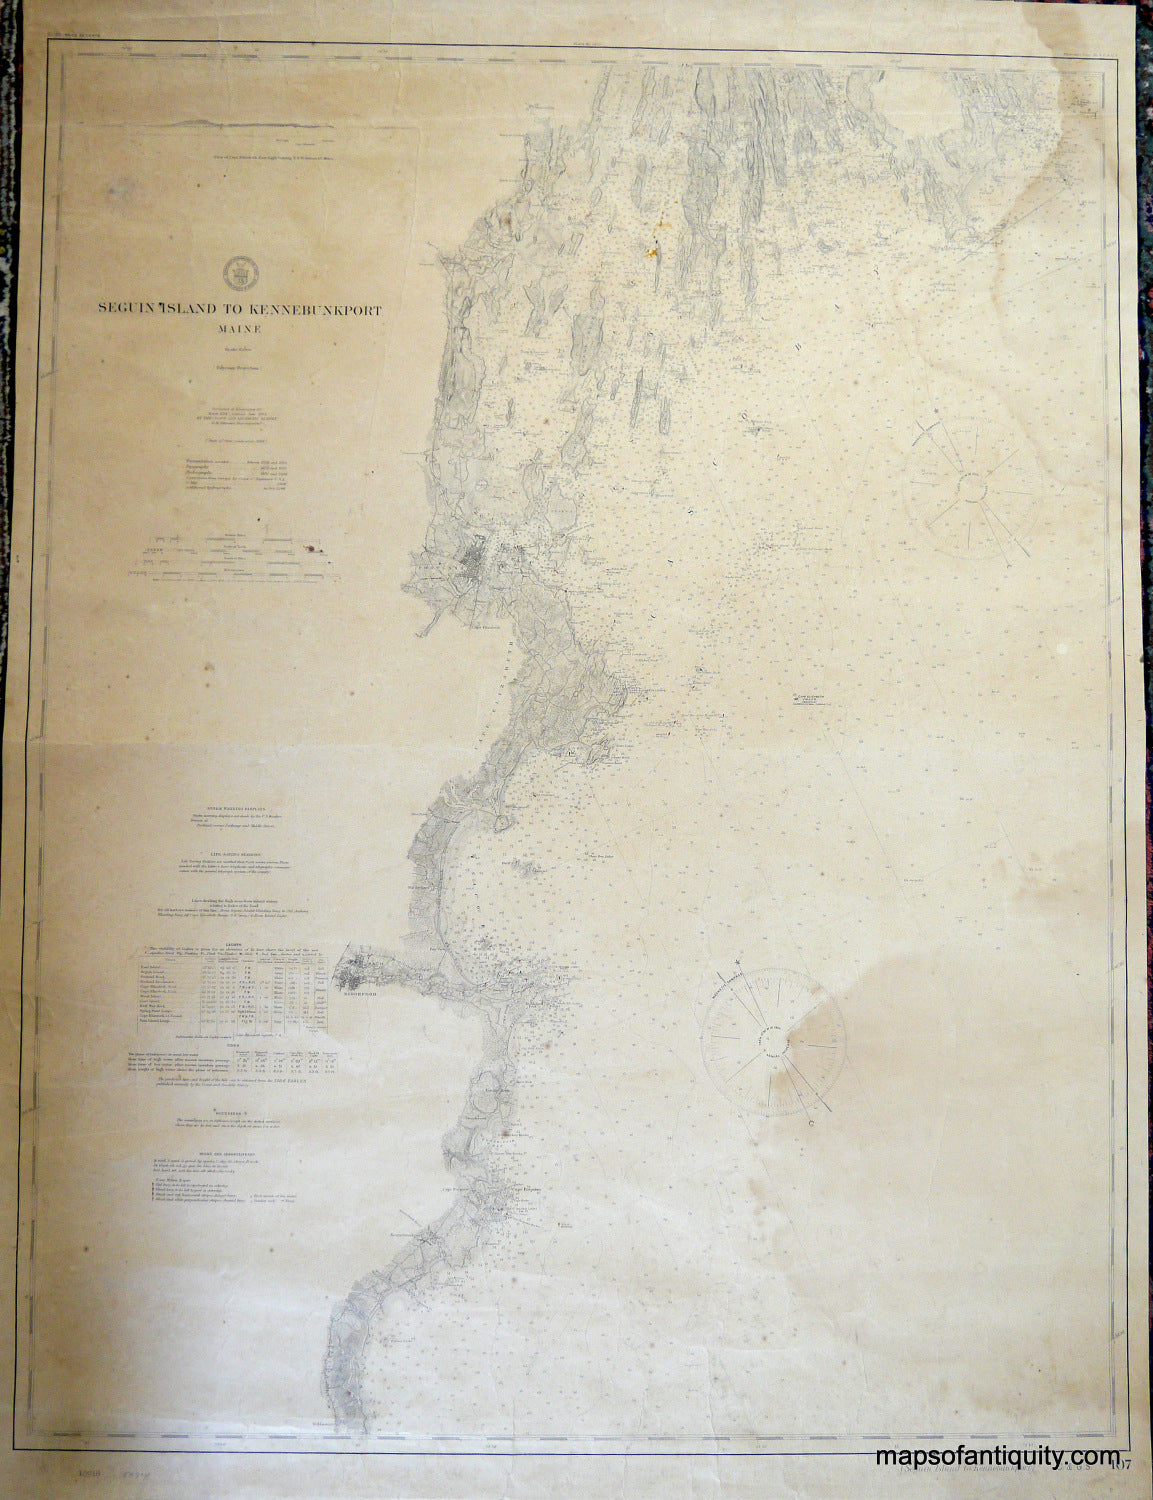 Black-&-White-Antique-Nautical-Chart-Seguin-Island-to-Kennebunkport-******-Antique-Nautical-Charts--1904-U.S.-Coast-Survey-Maps-Of-Antiquity